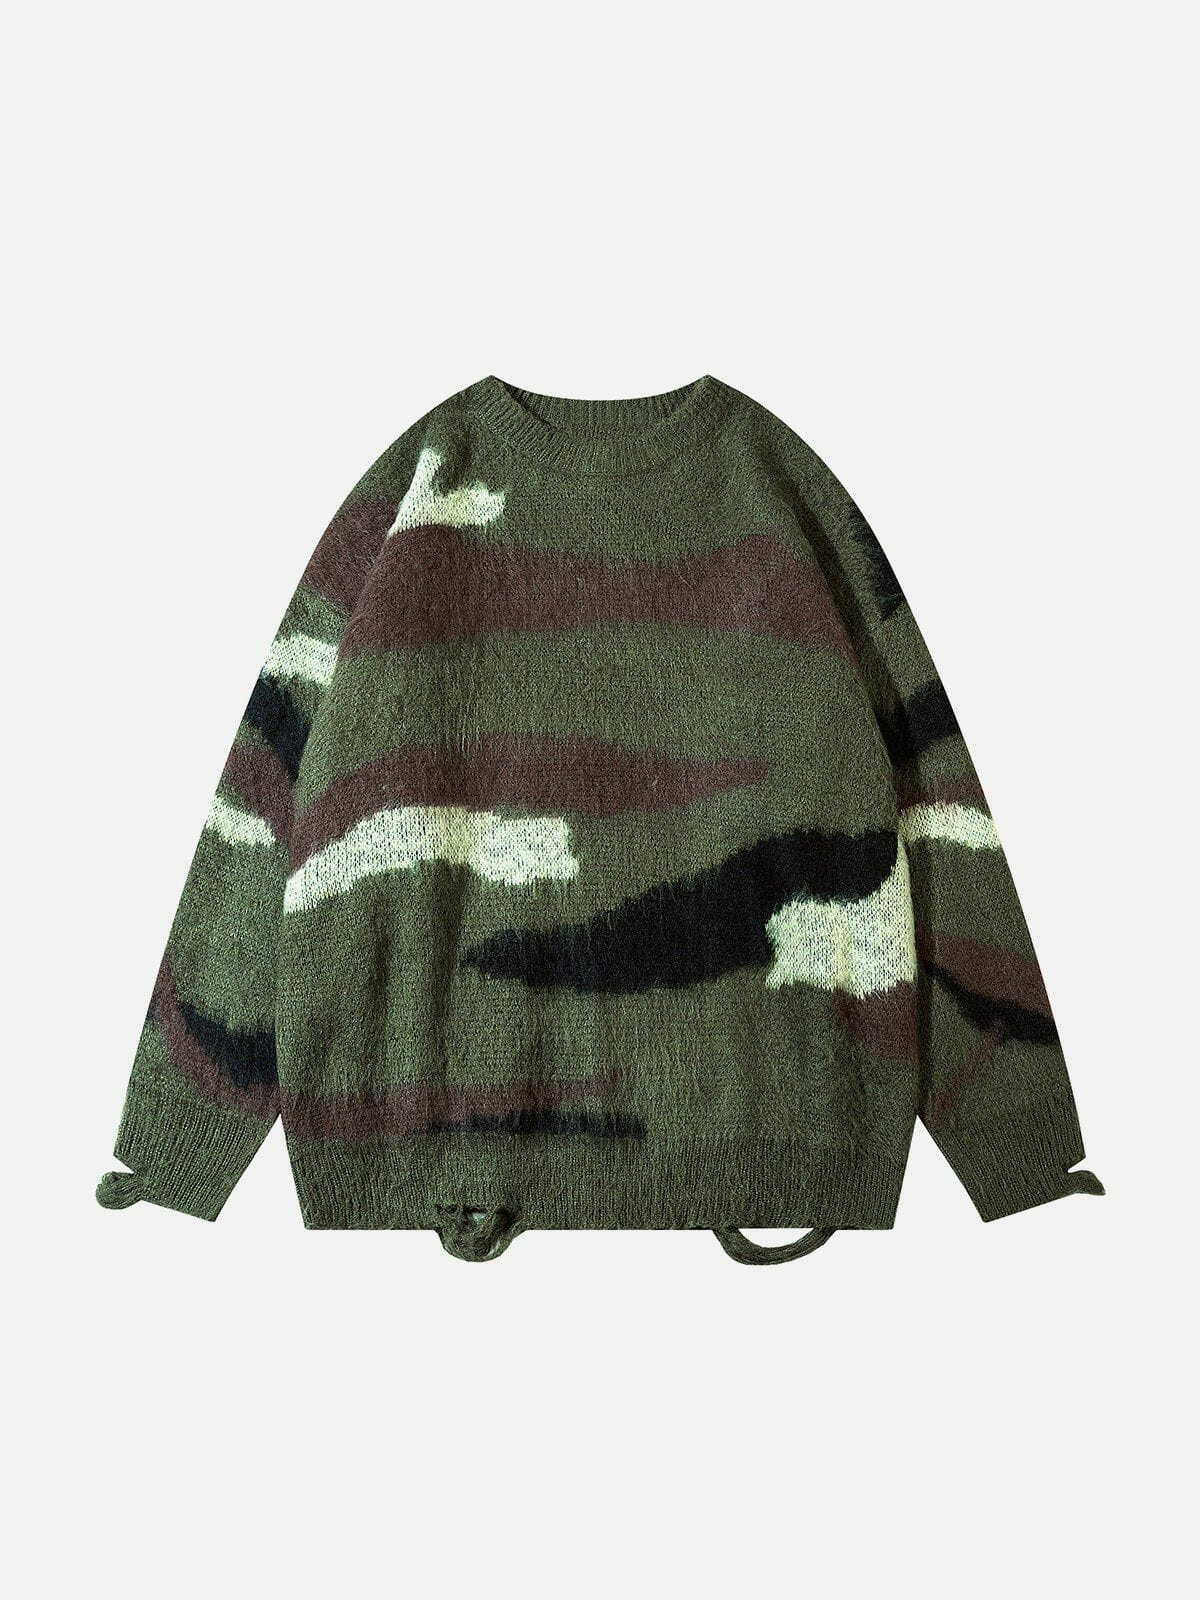 camouflage crewneck sweater urban camo streetwear 7274